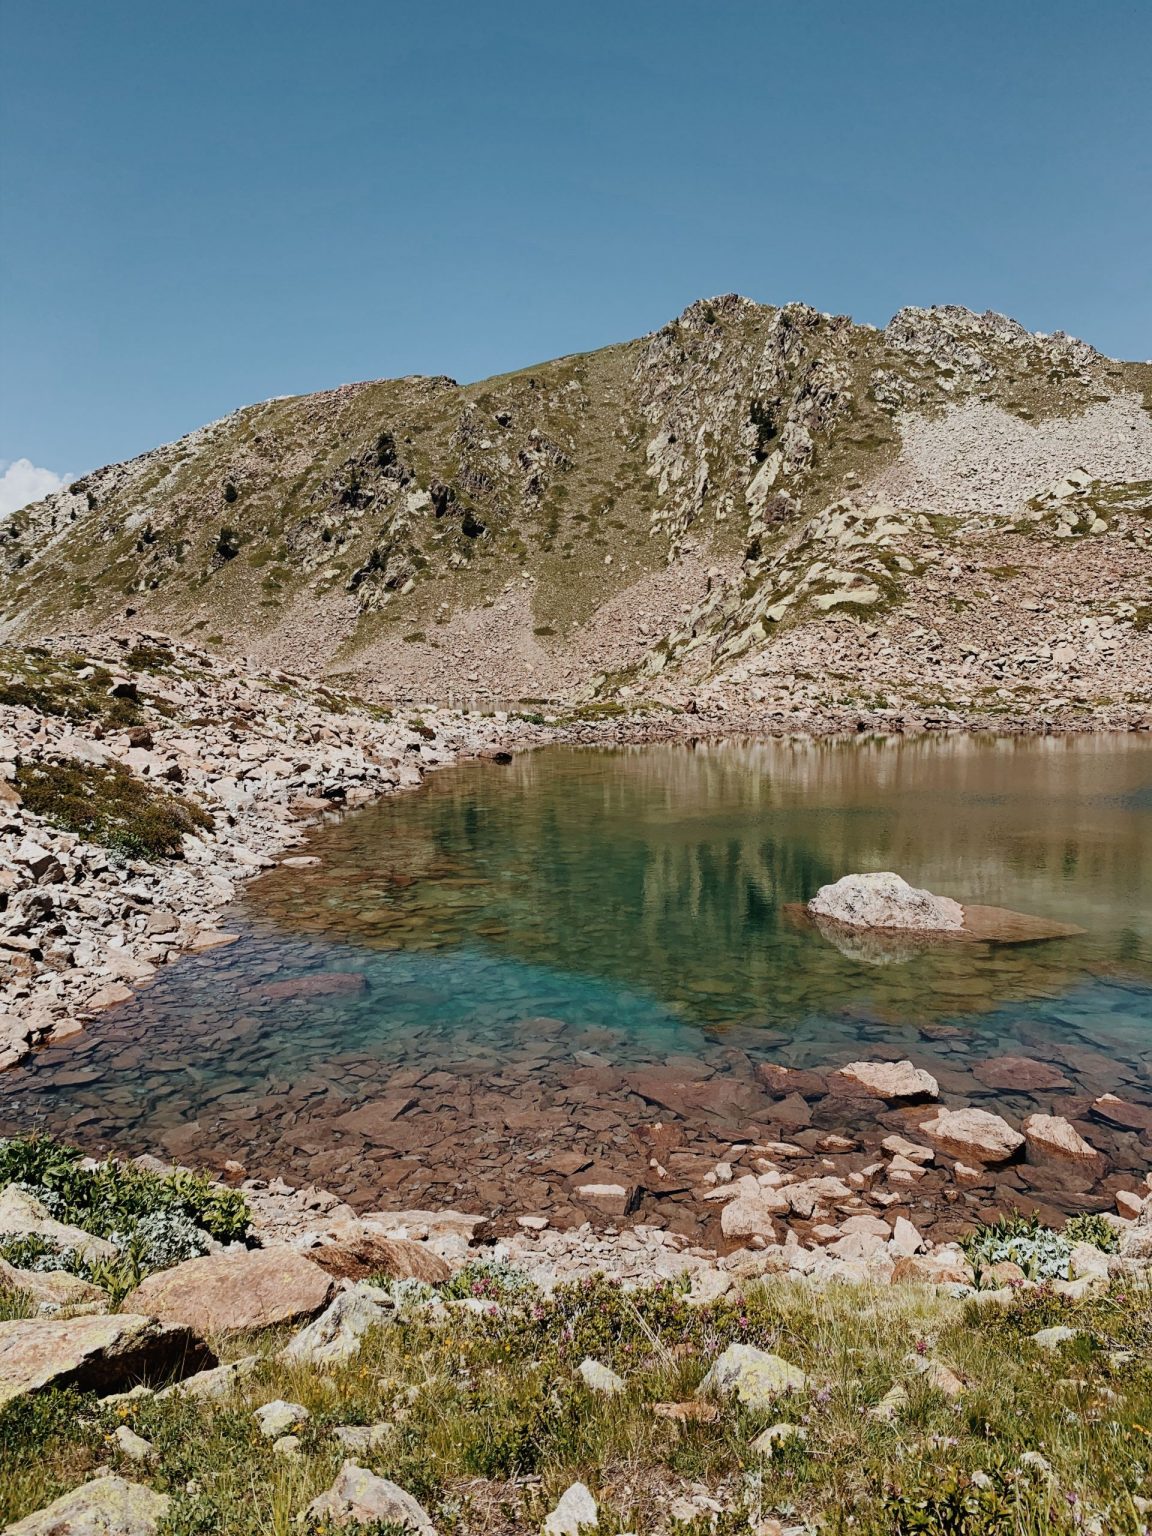 Hike to Malinvern & Paur Lakes – Stura Valley – Italy – Chiara Lewis